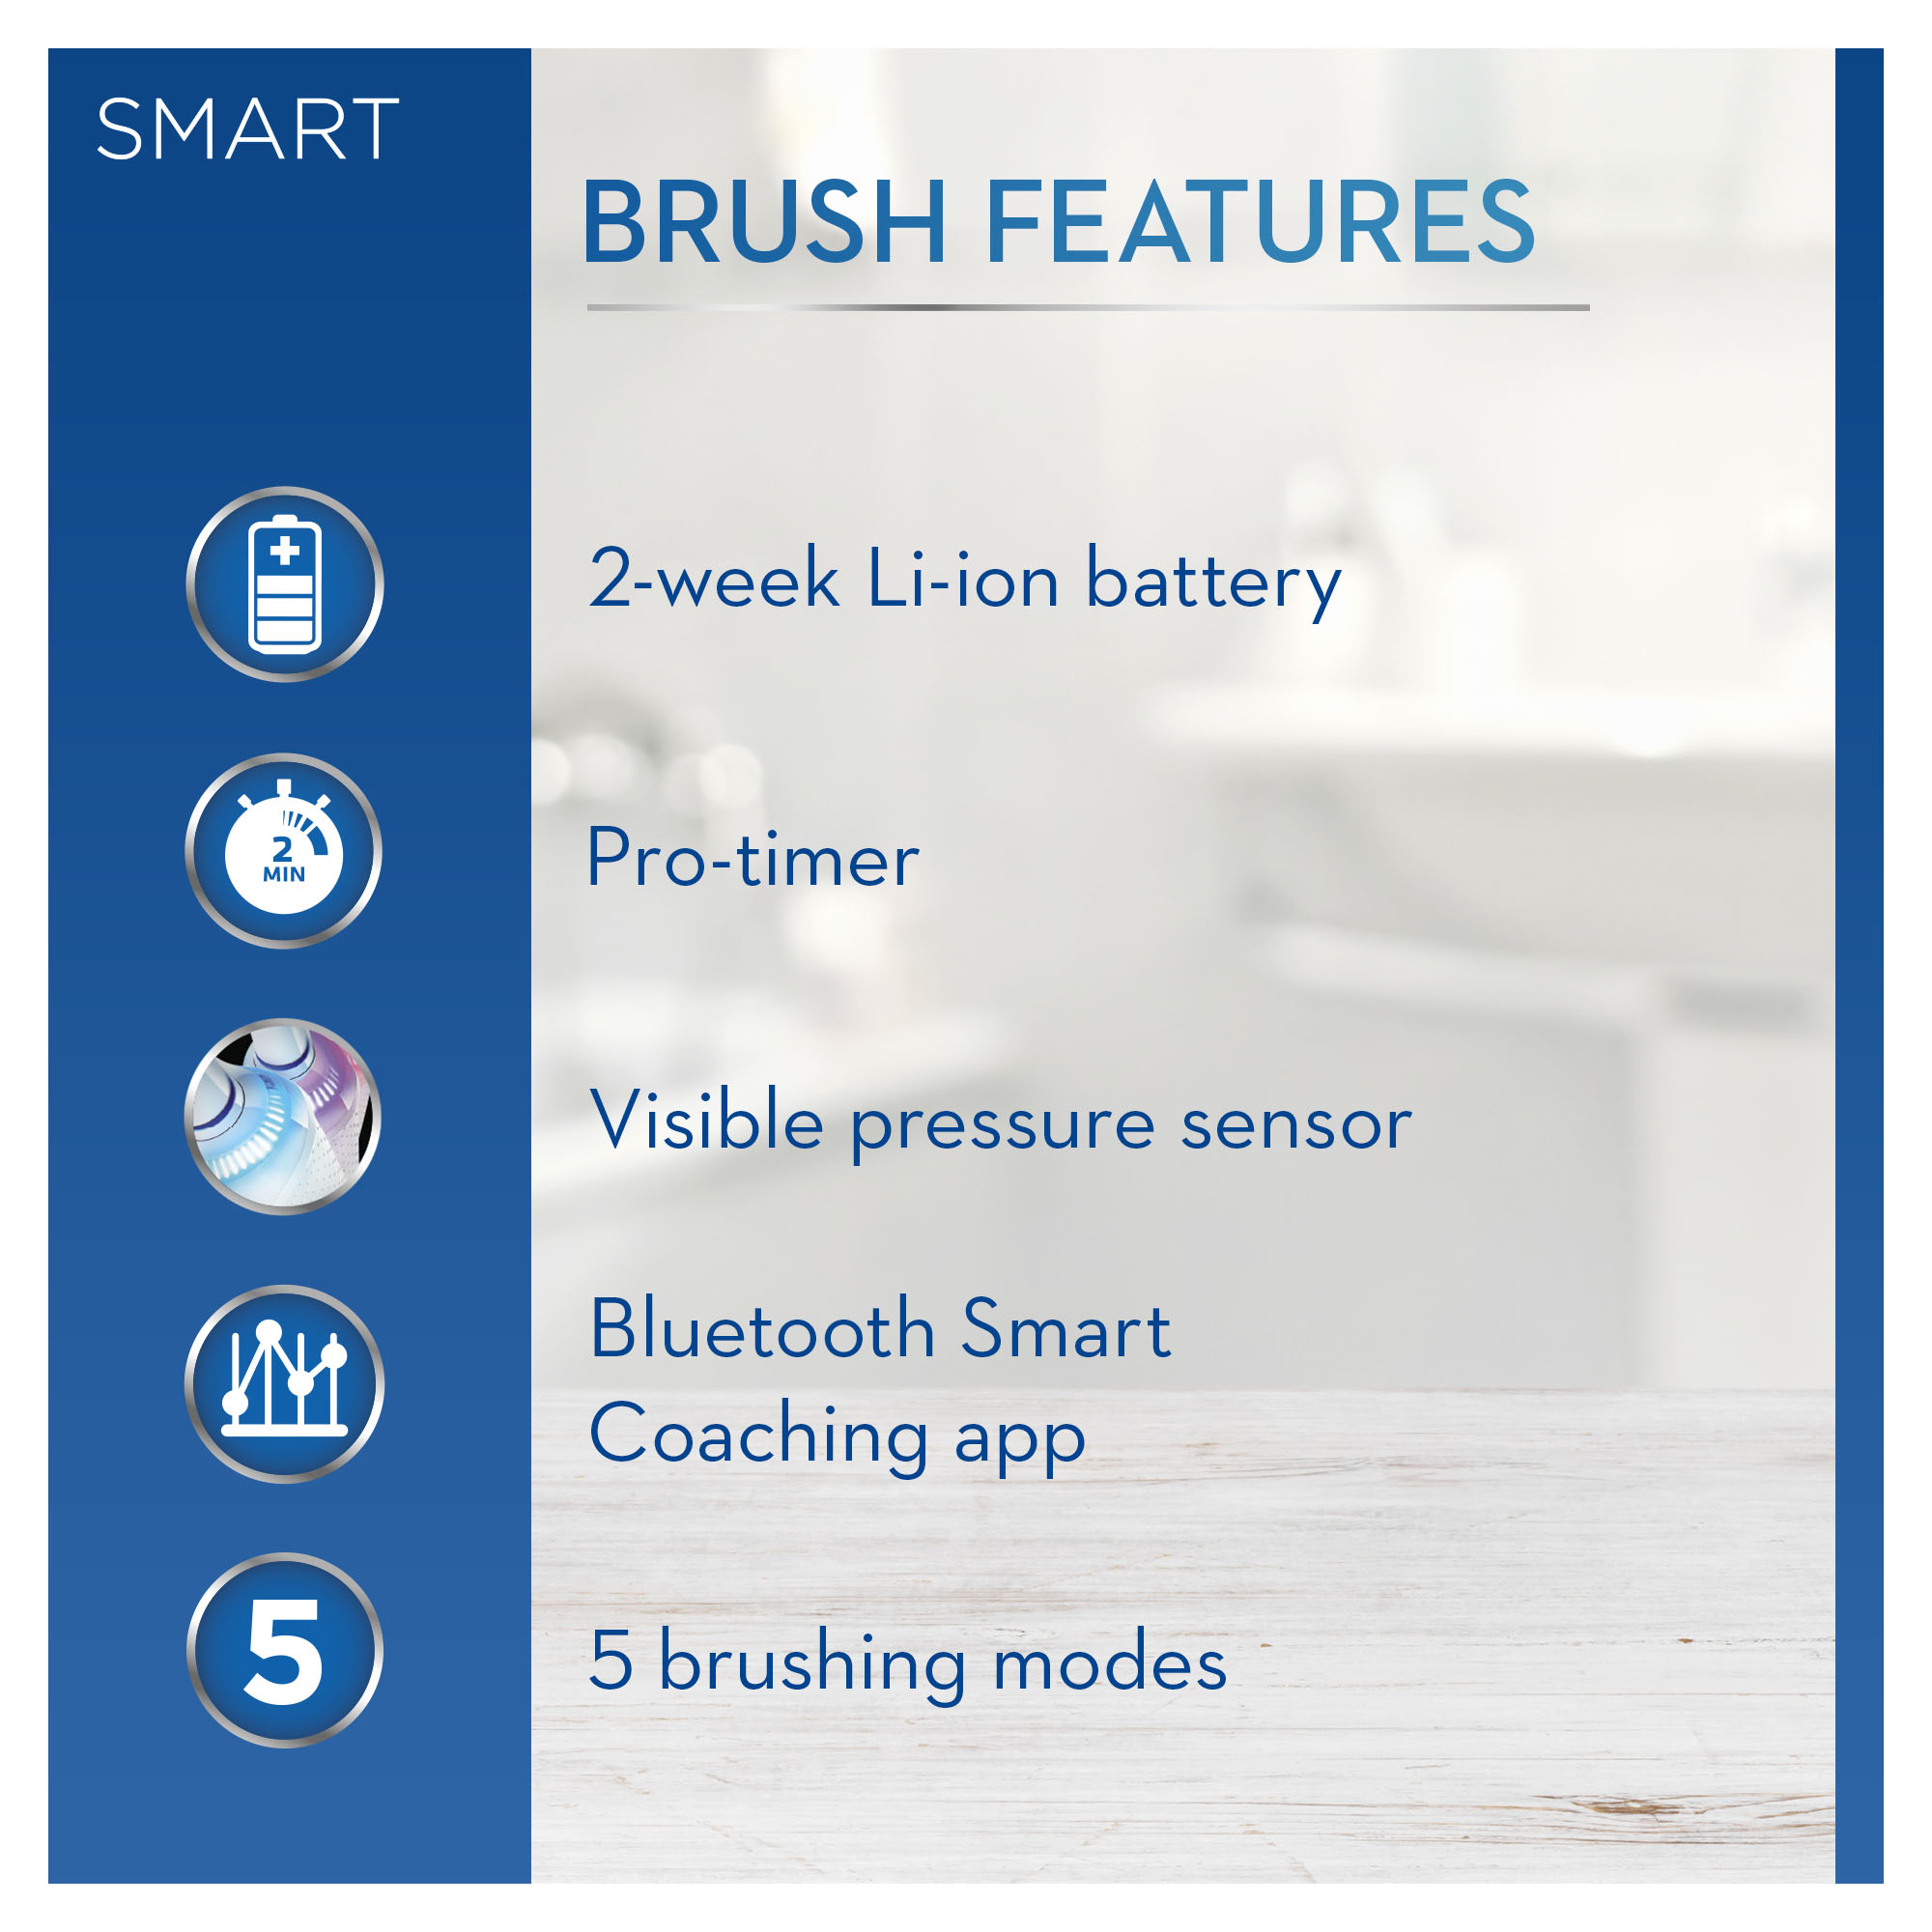 5 brushing modes